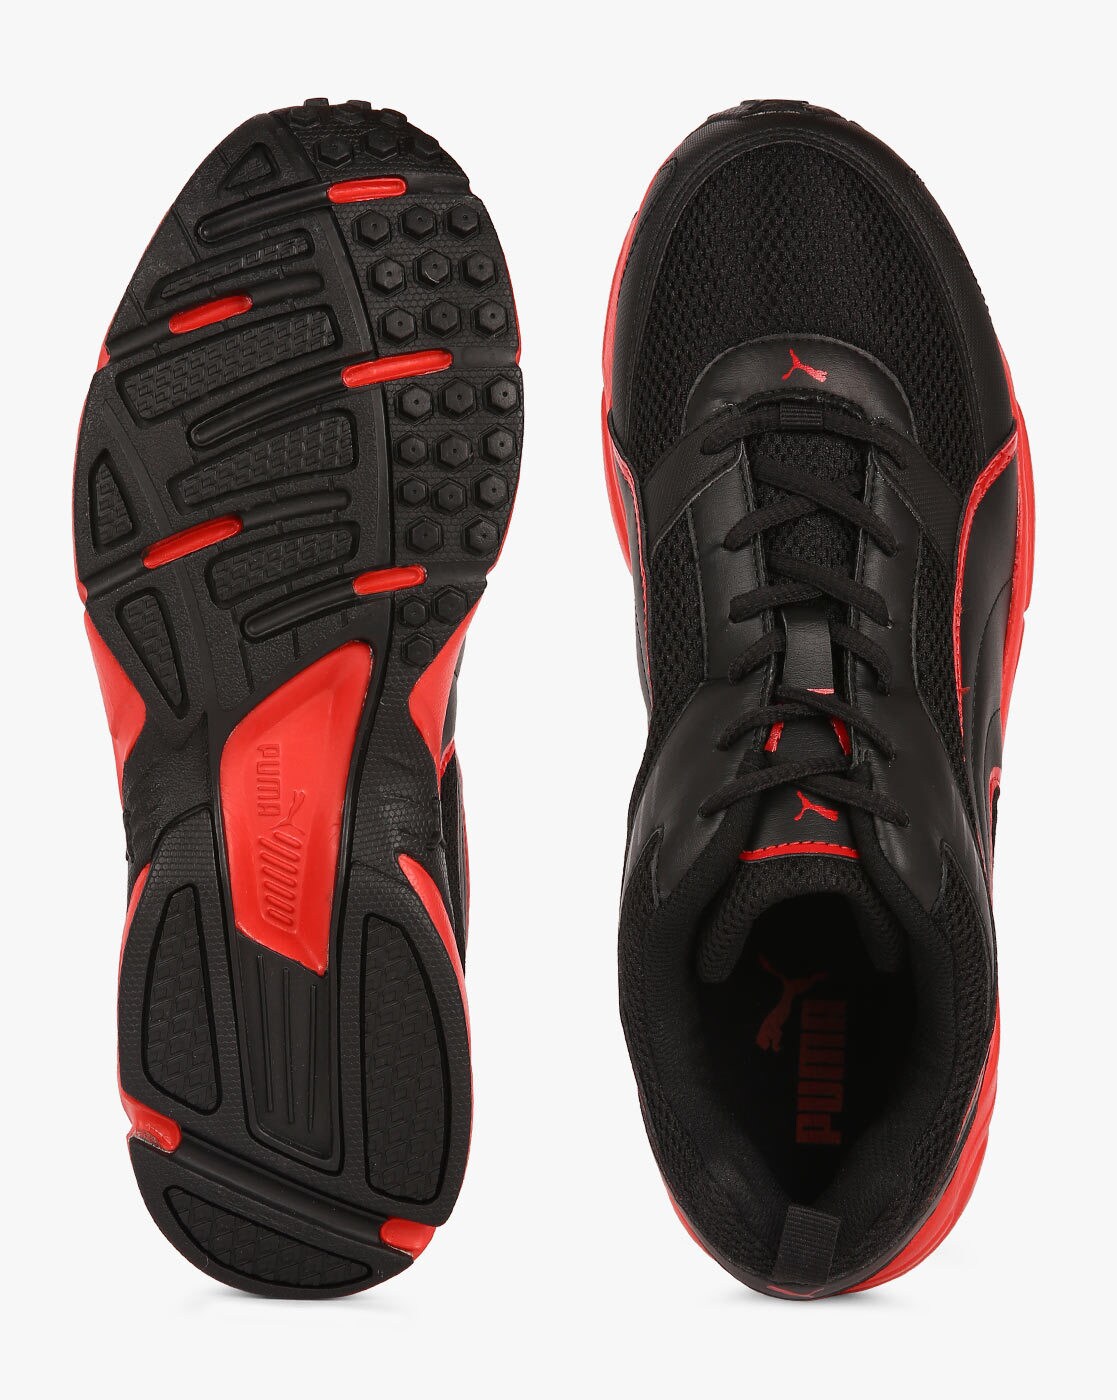 puma atom fashion iii idp running shoes